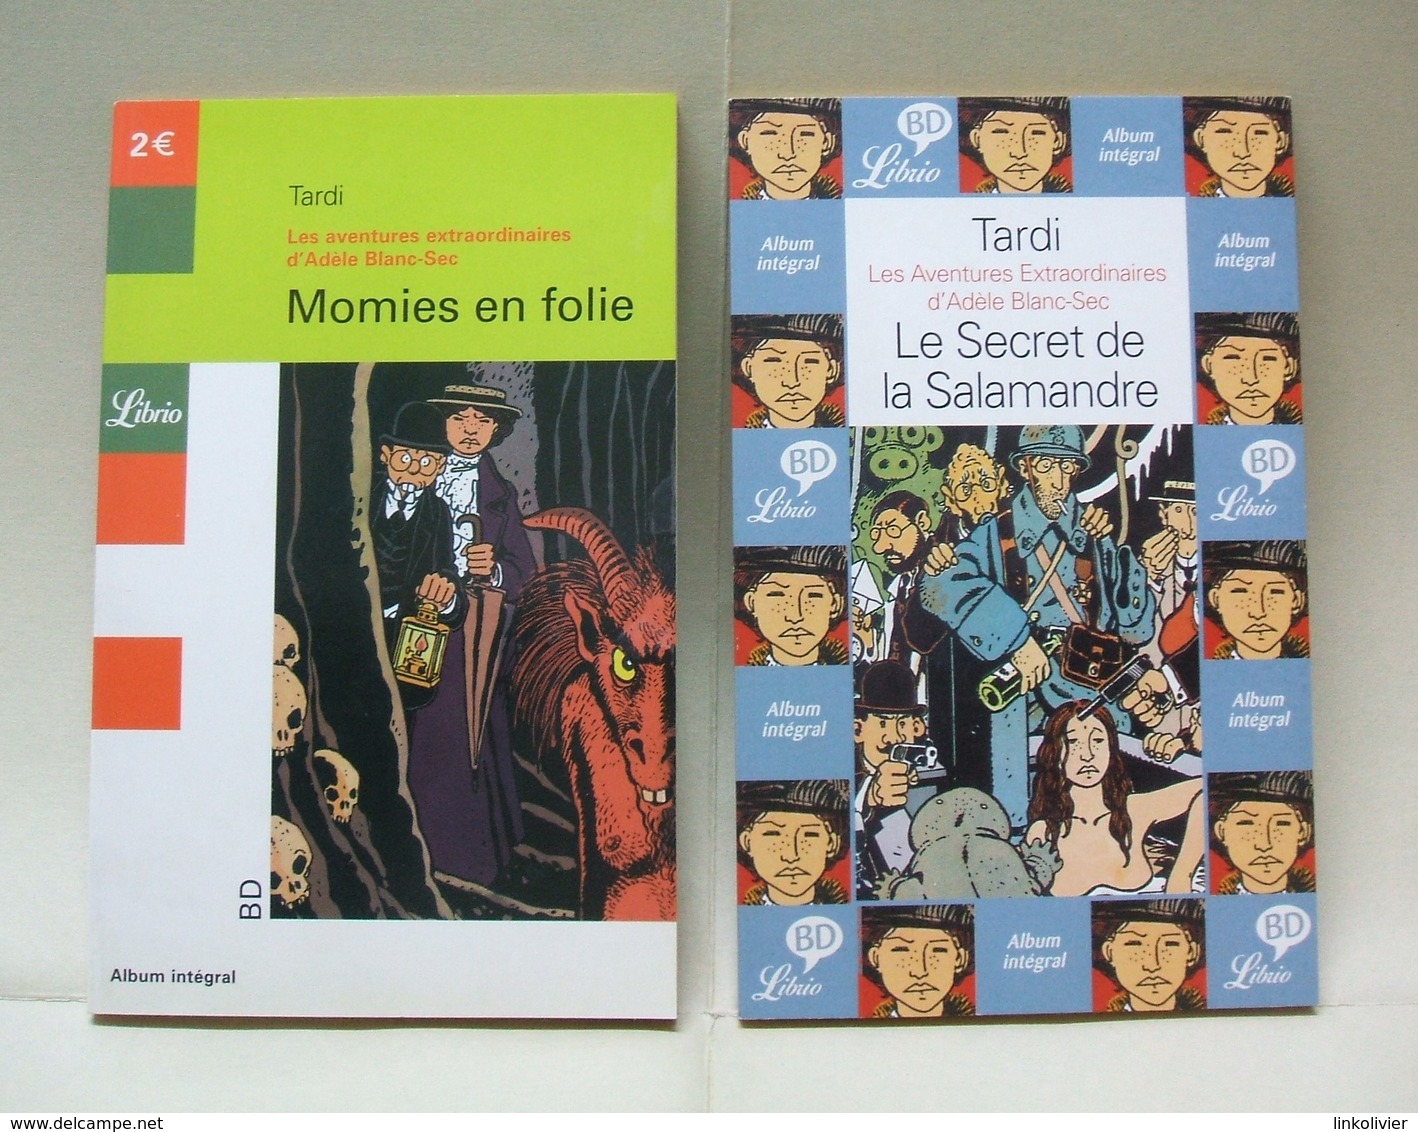 2 X ADELE BLANC-SEC : Le Secret De La Salamandre / Momies En Folie - Tardi - Librio 2002 / 2003 - Tardi